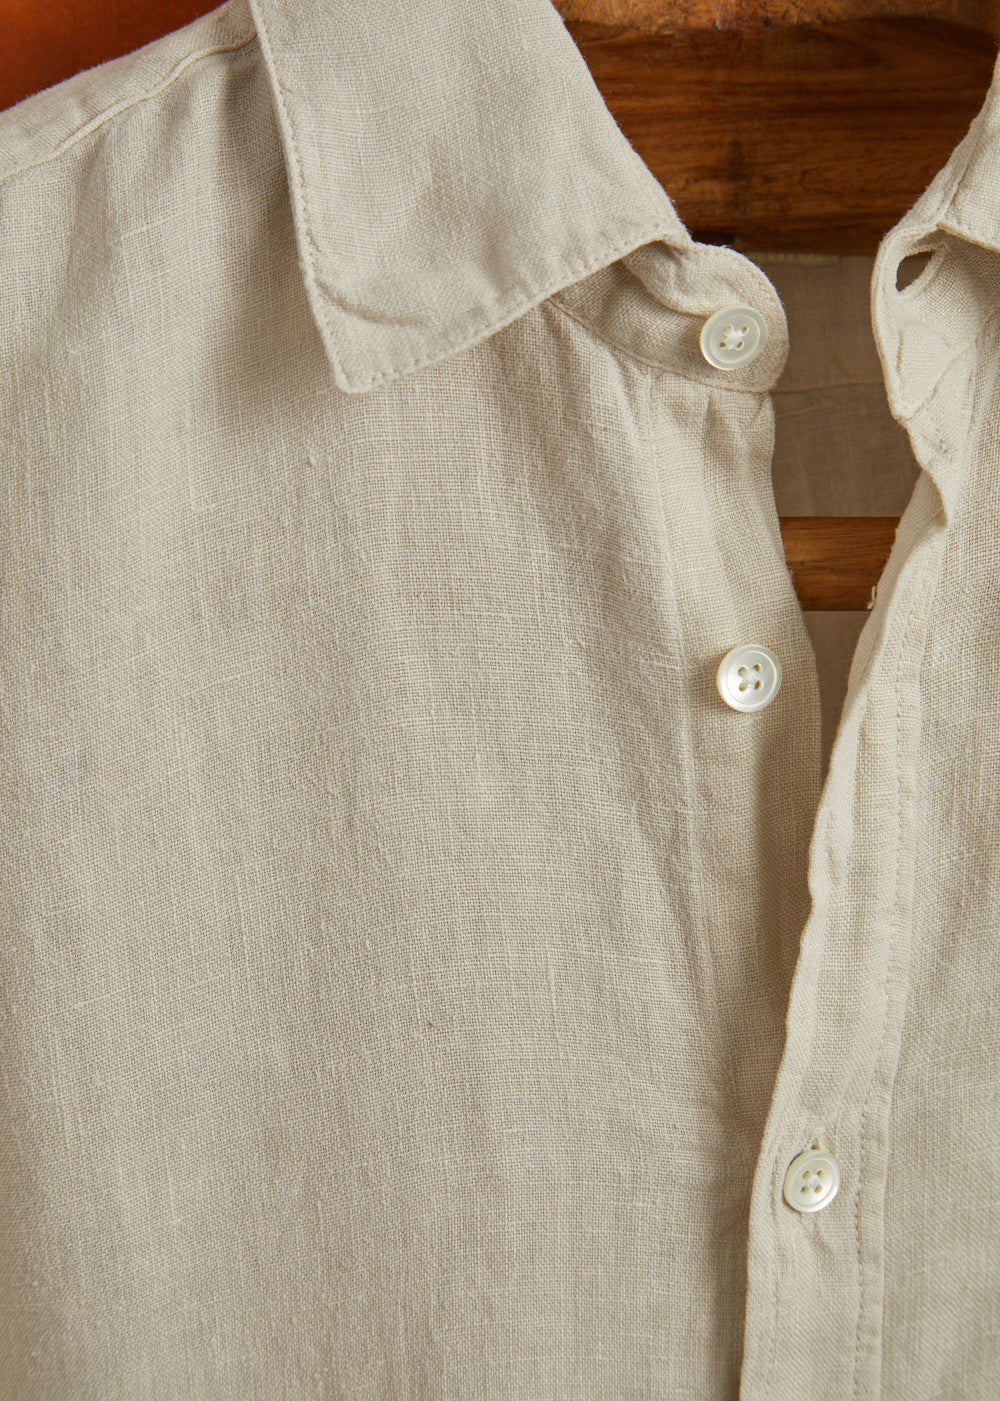 Raw Linen Long Sleeve Shirt - Portuguese Flannel - Danali